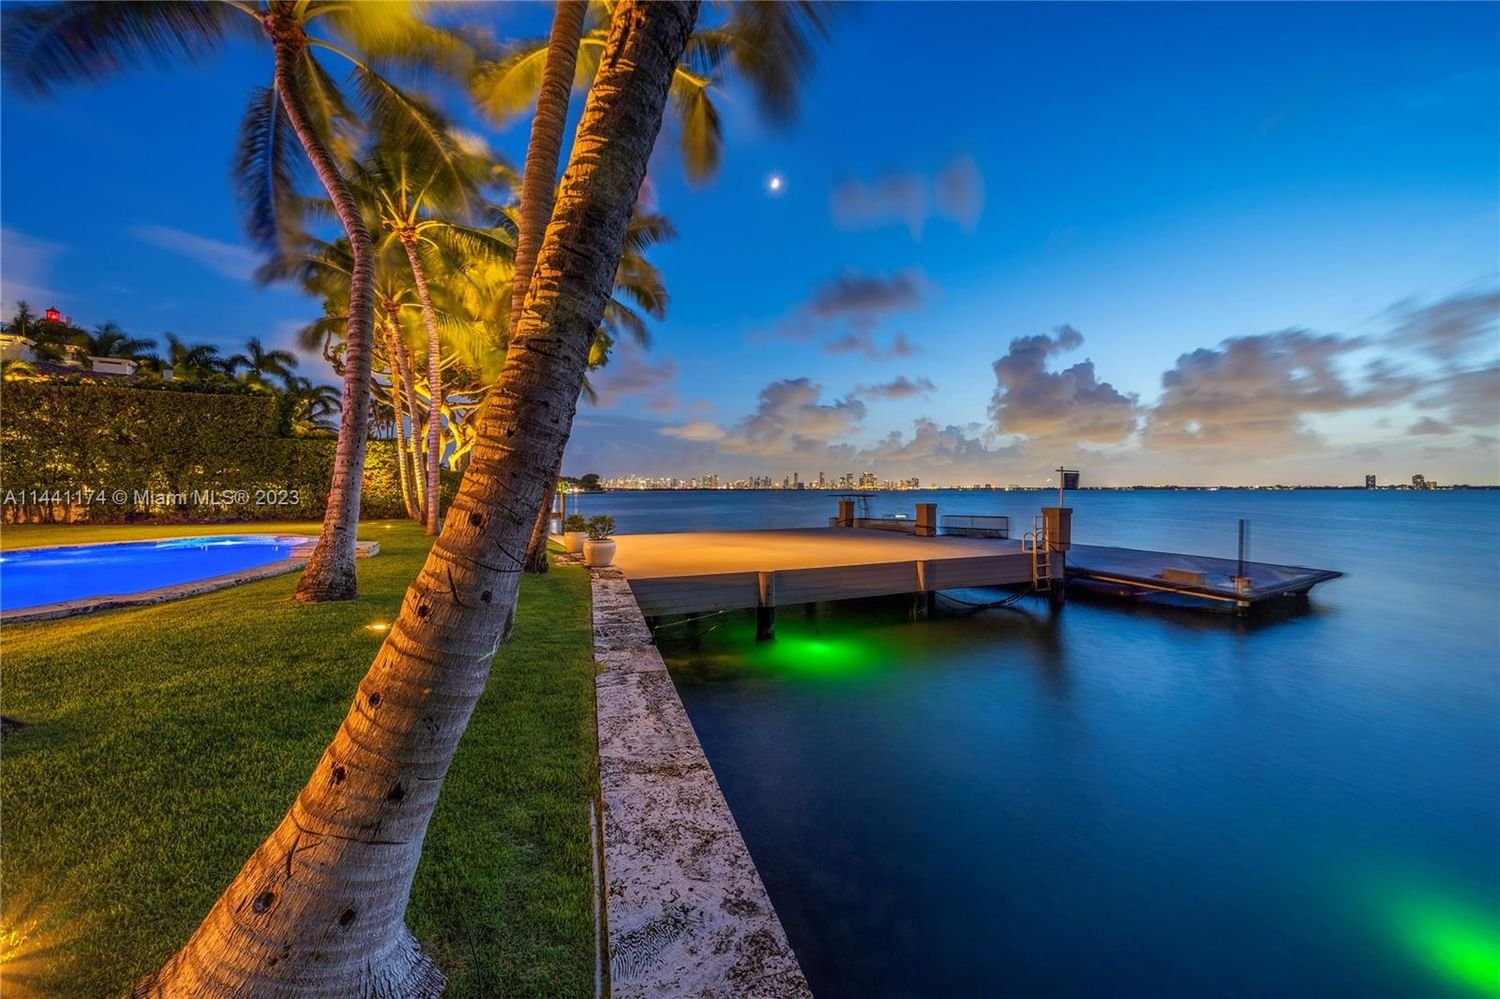 Real estate property located at 5050 Bay Rd, Miami-Dade County, Miami Beach, FL